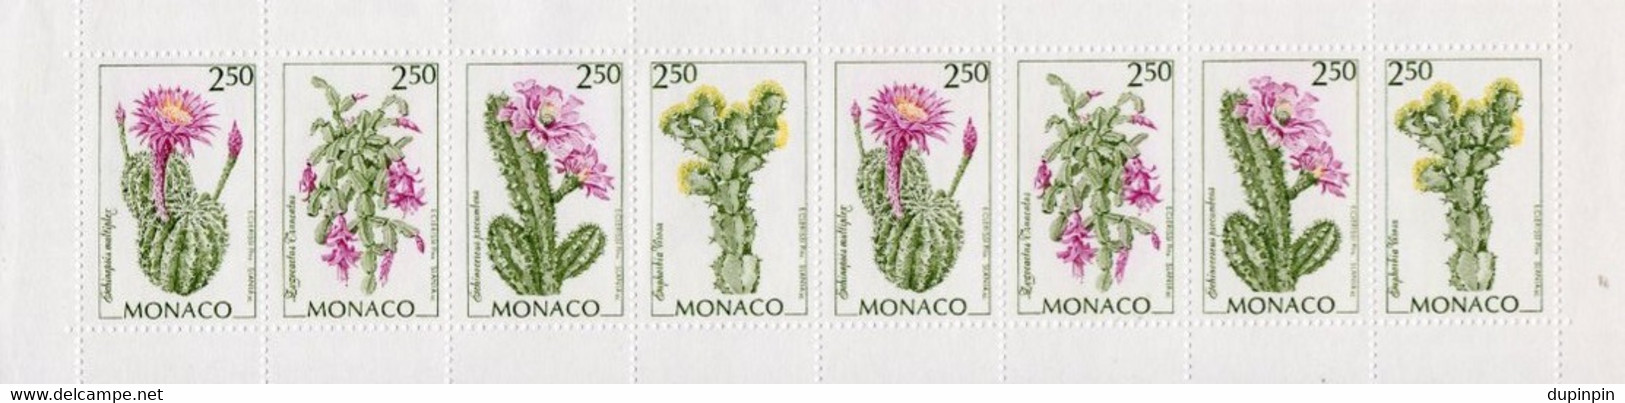 Monaco - Carnet YT N°9 - Flore Du Jardin Exotique - 1993 - Neuf - Carnets